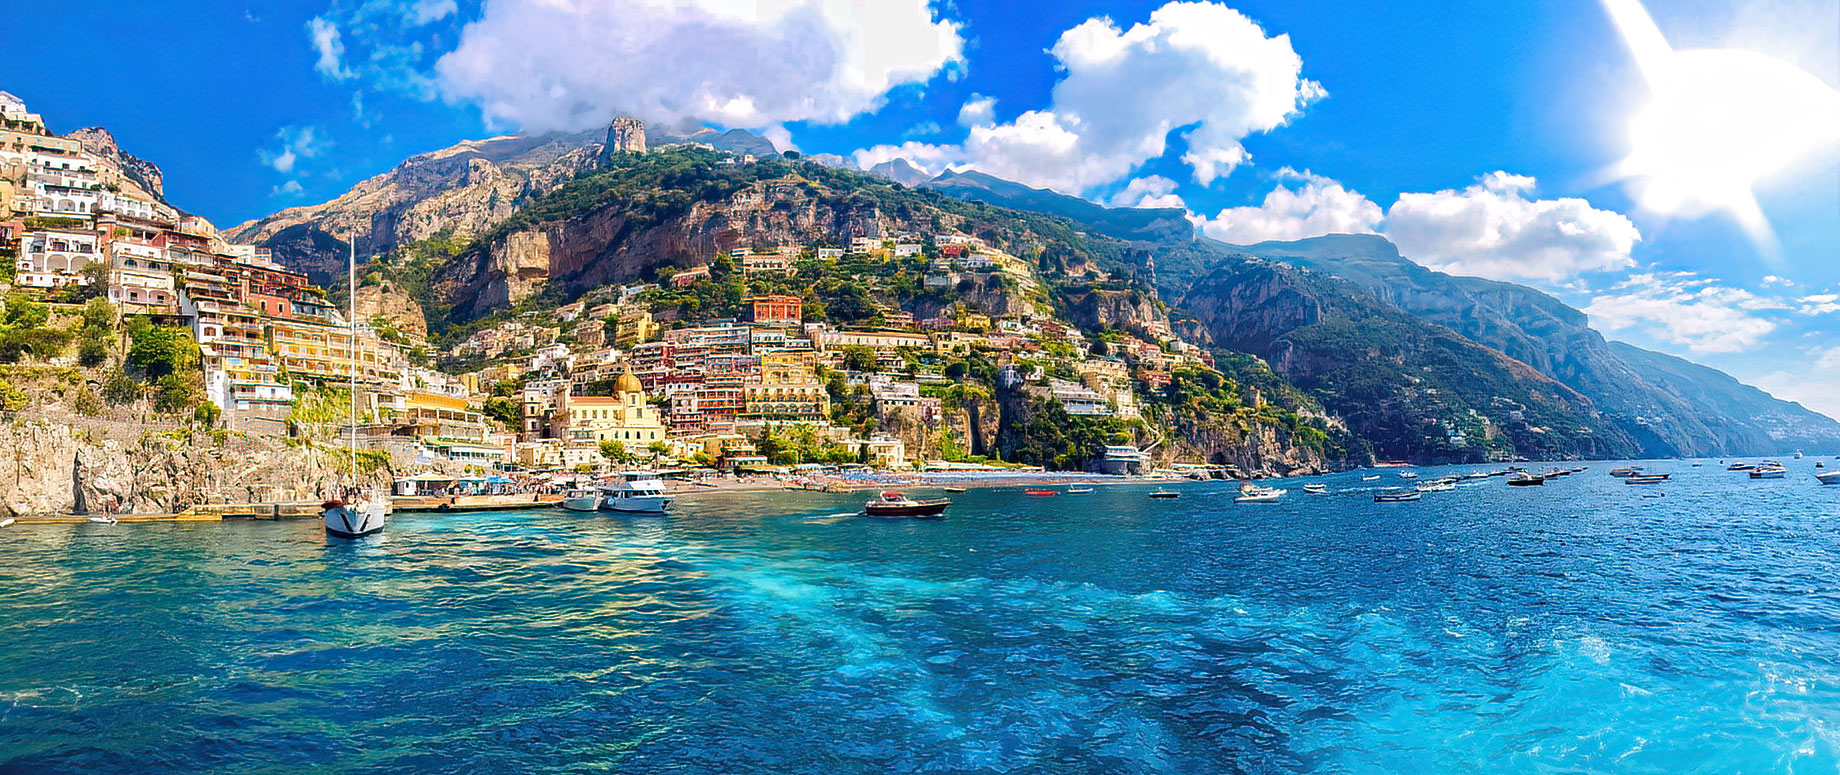 Positano - The Amalfi Coast of Italy